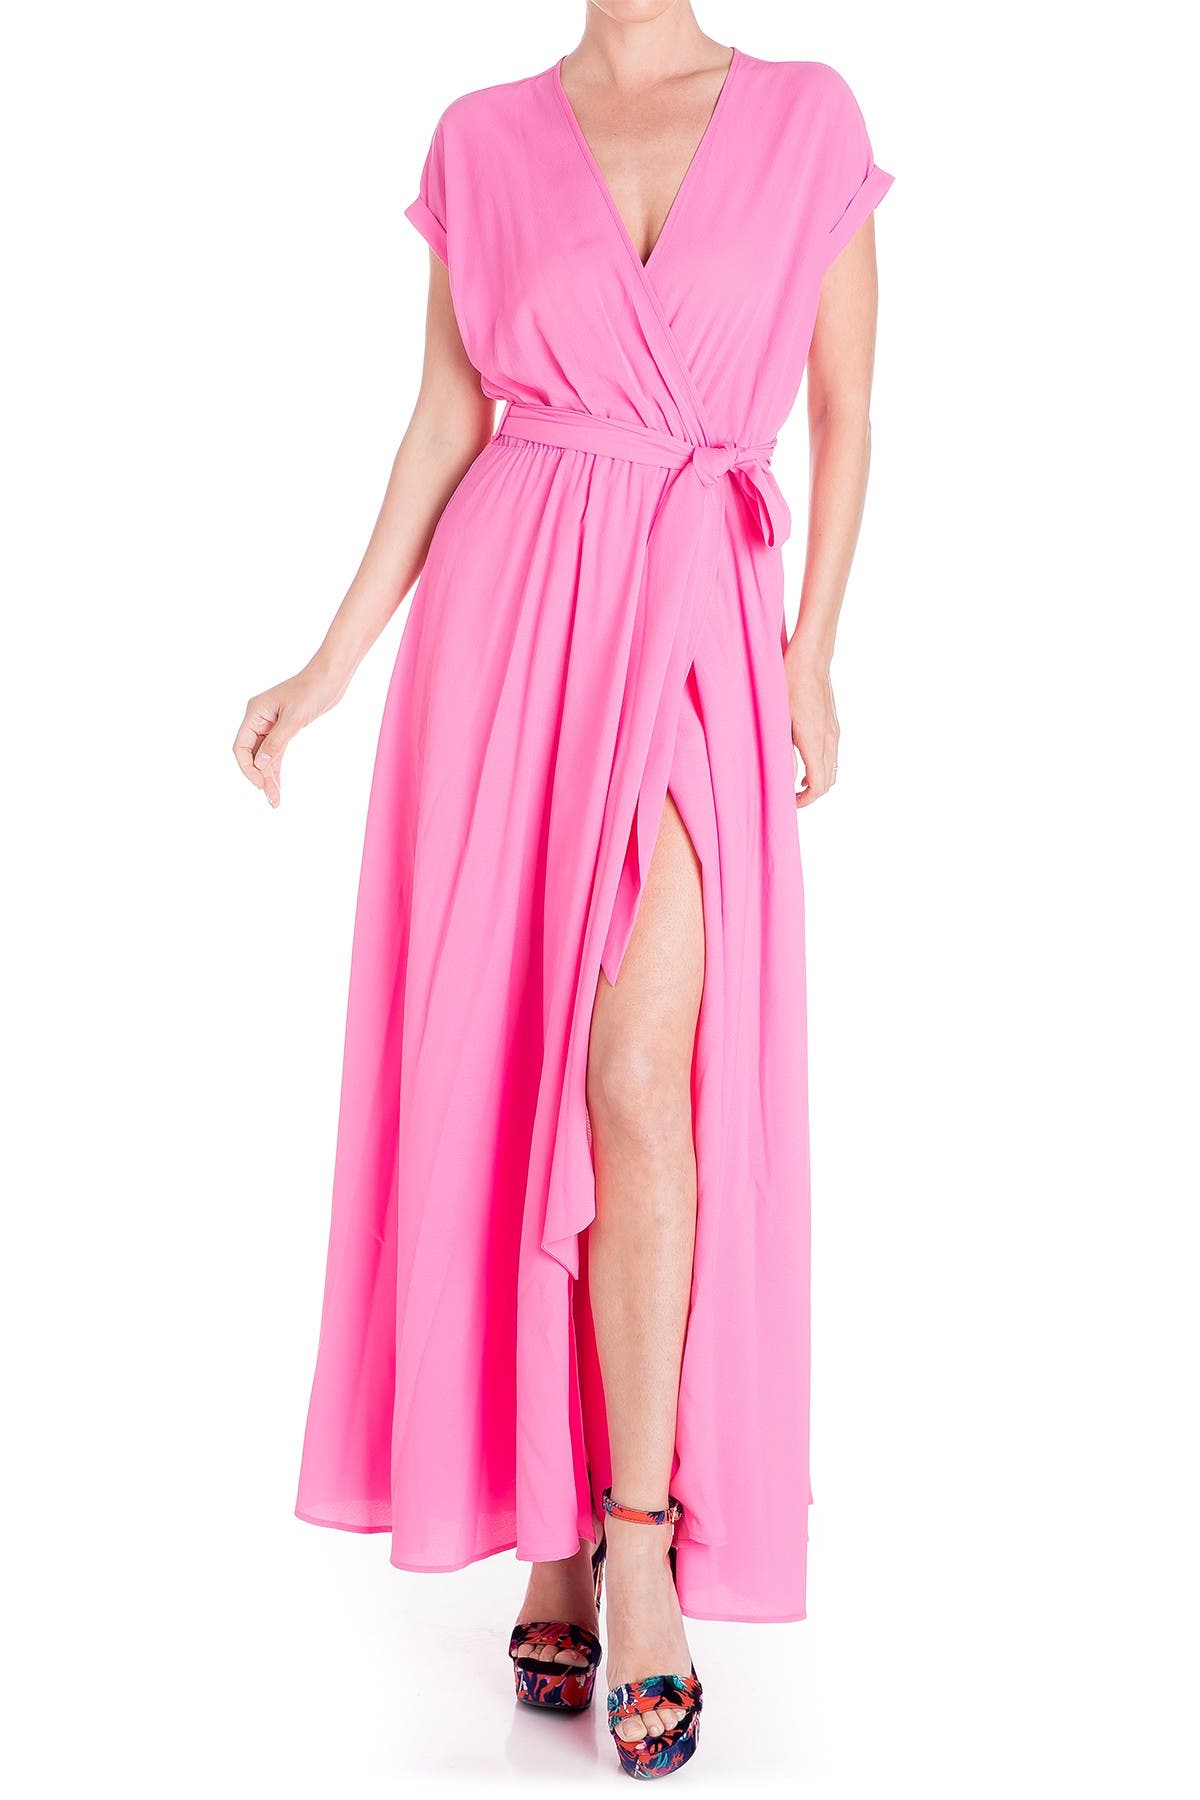 short pink wrap dress